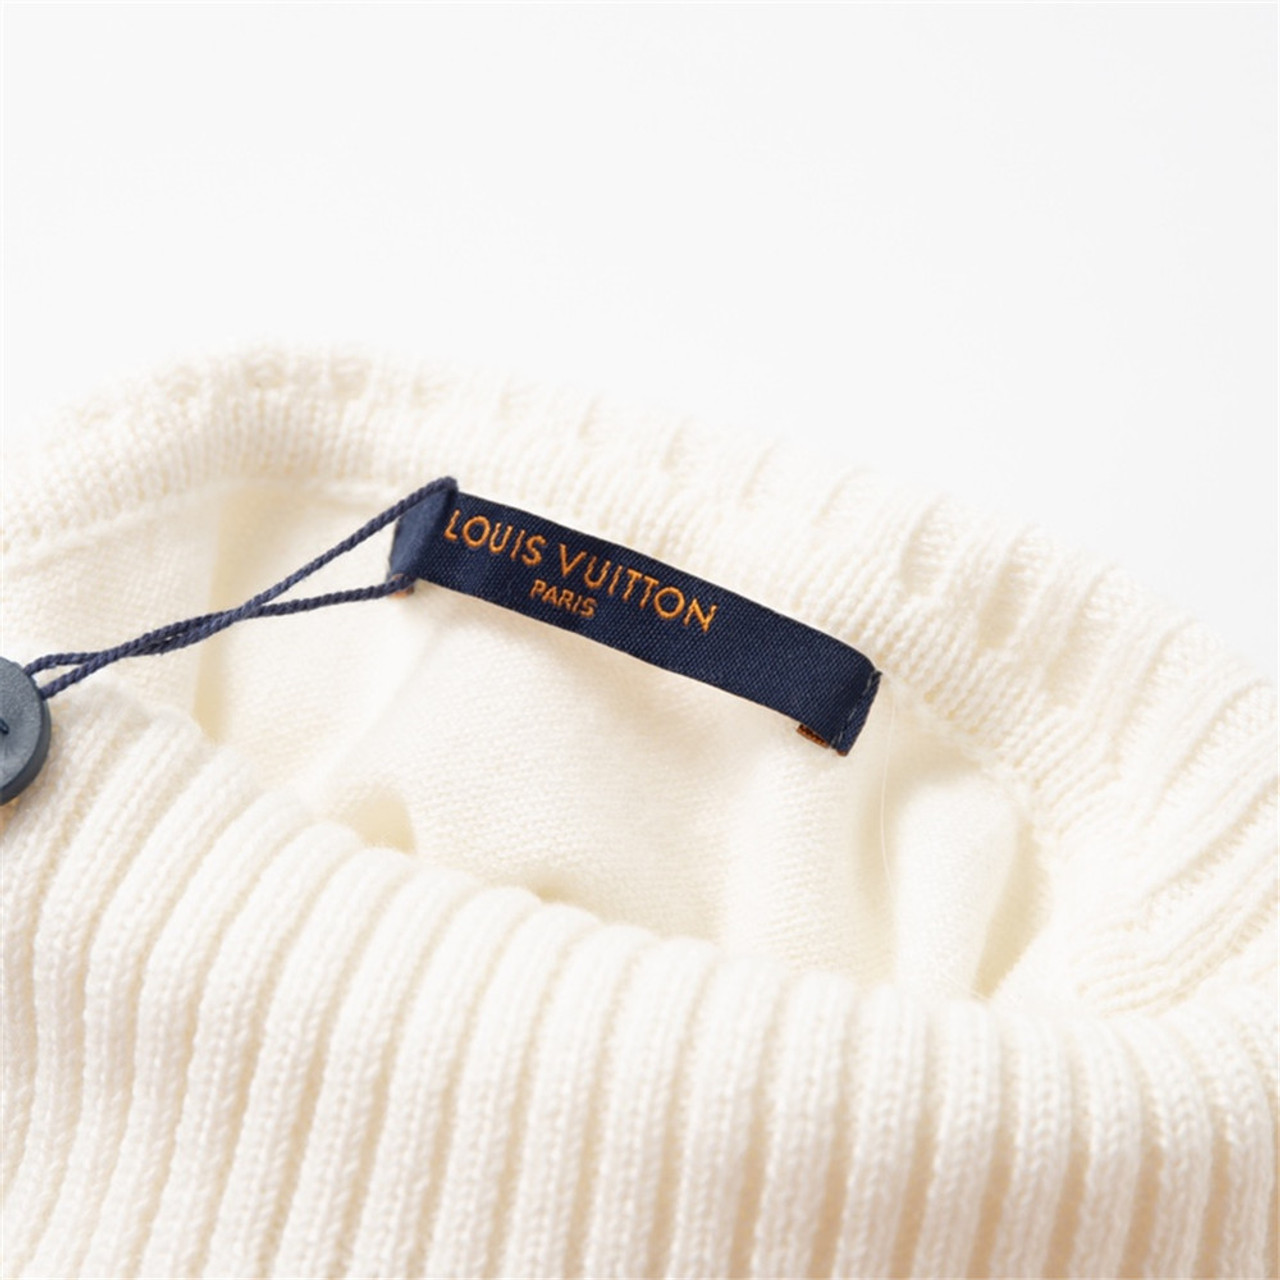 Shop Louis Vuitton Intarsia heart turtle neck (1A9GRB, 1A9GRB) by